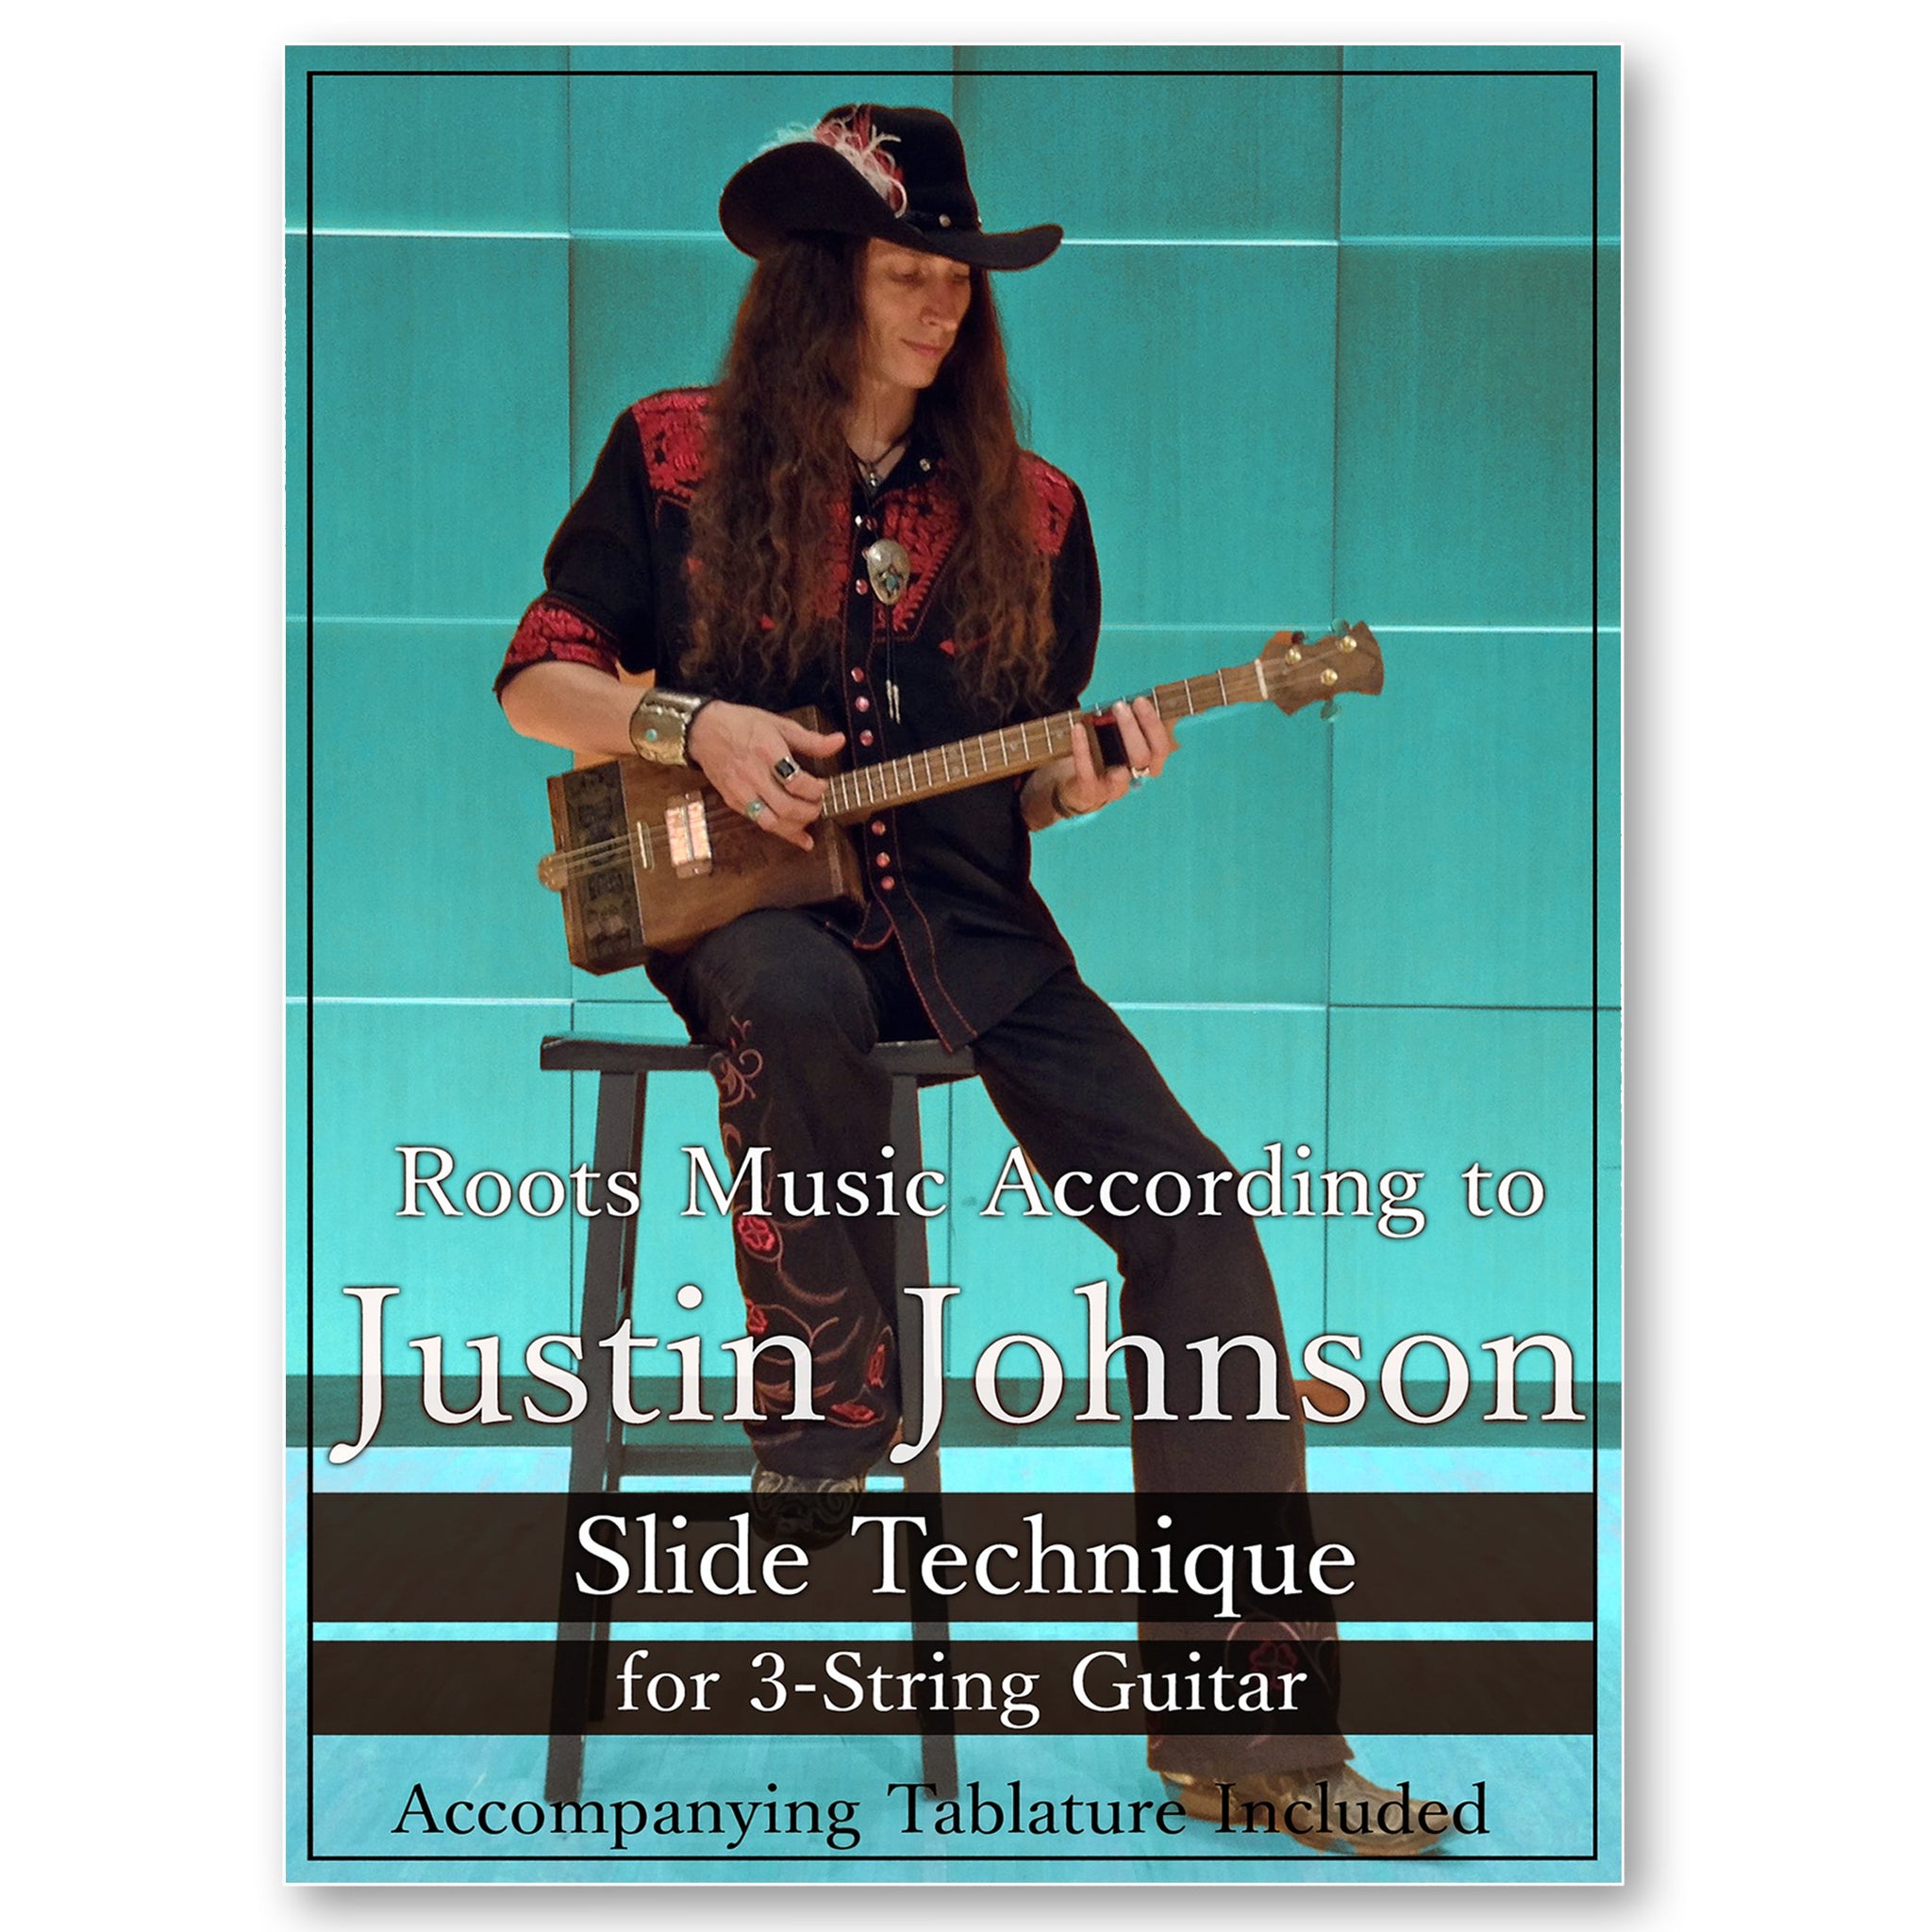 "Slide Technique for the 3-String Guitar" Instructional DVD by Justin Johnson